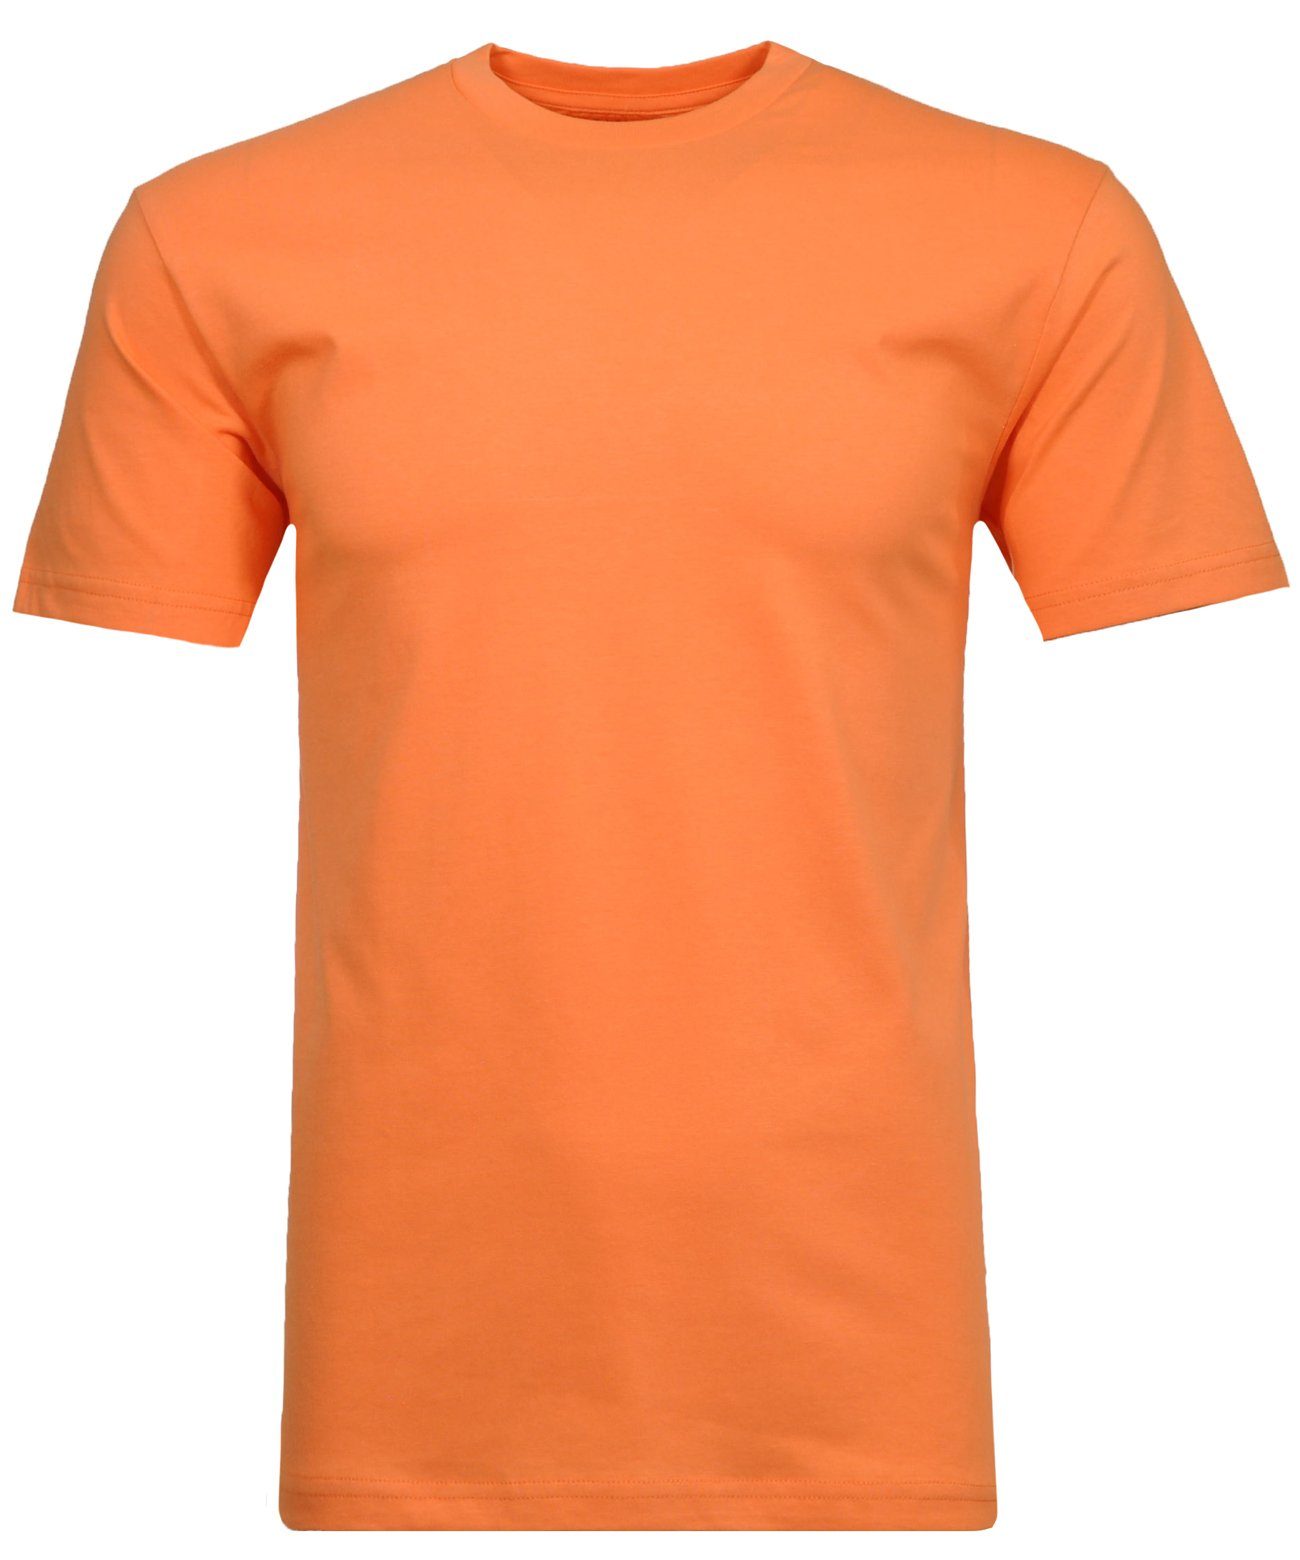 RAGMAN Longshirt Aprikose-052 | T-Shirts